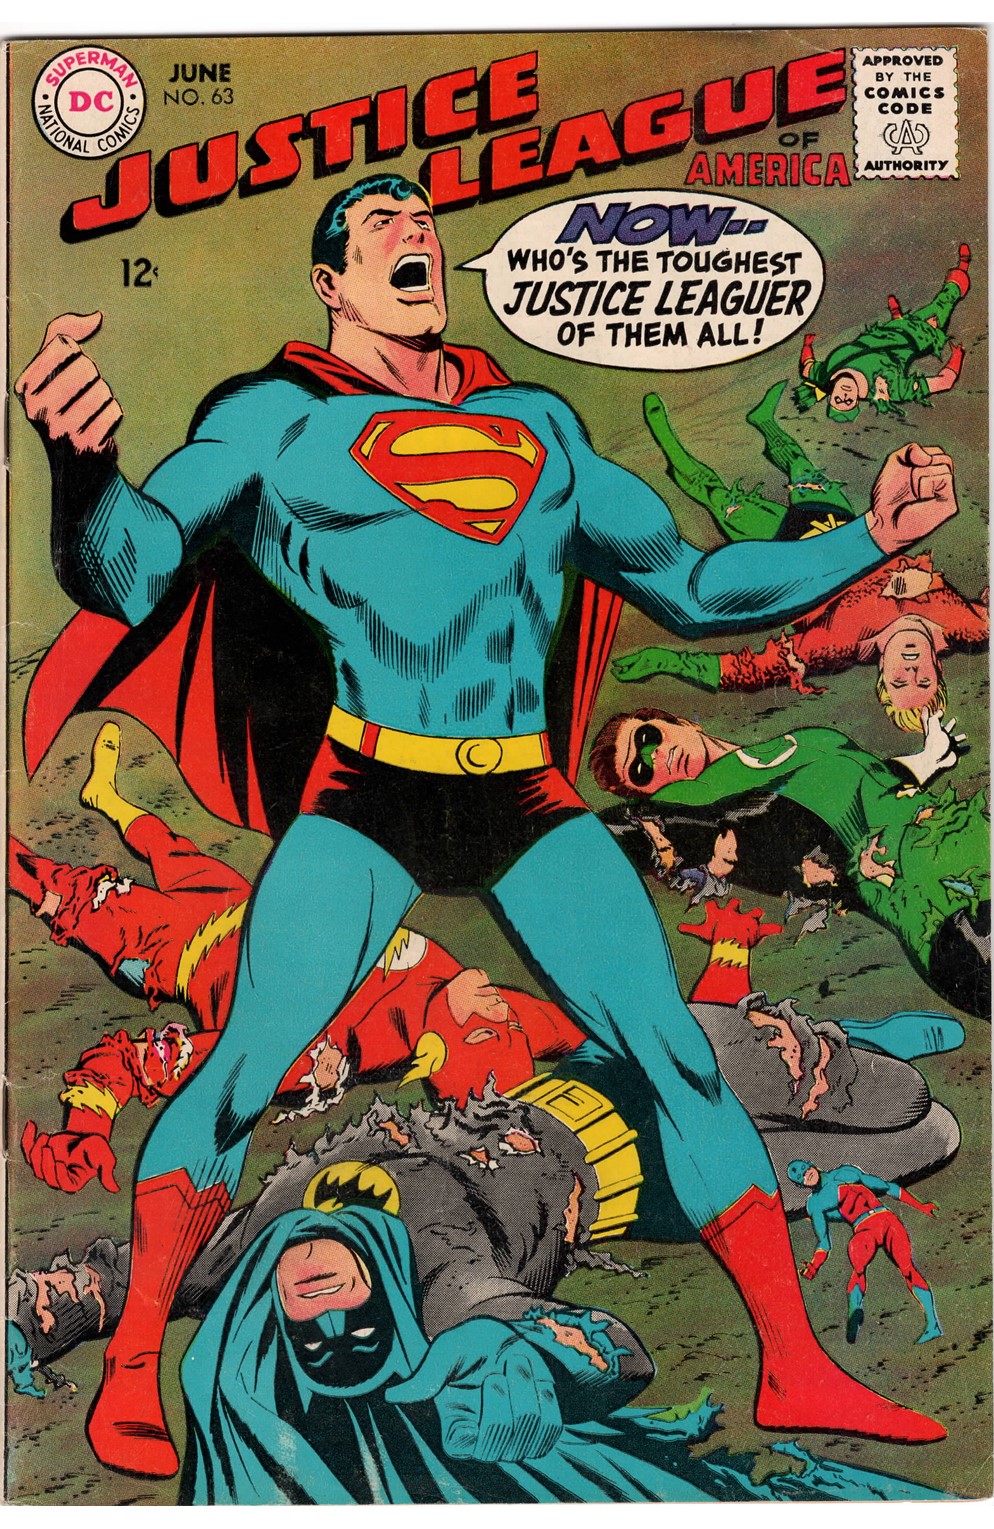 Justice League of America #063